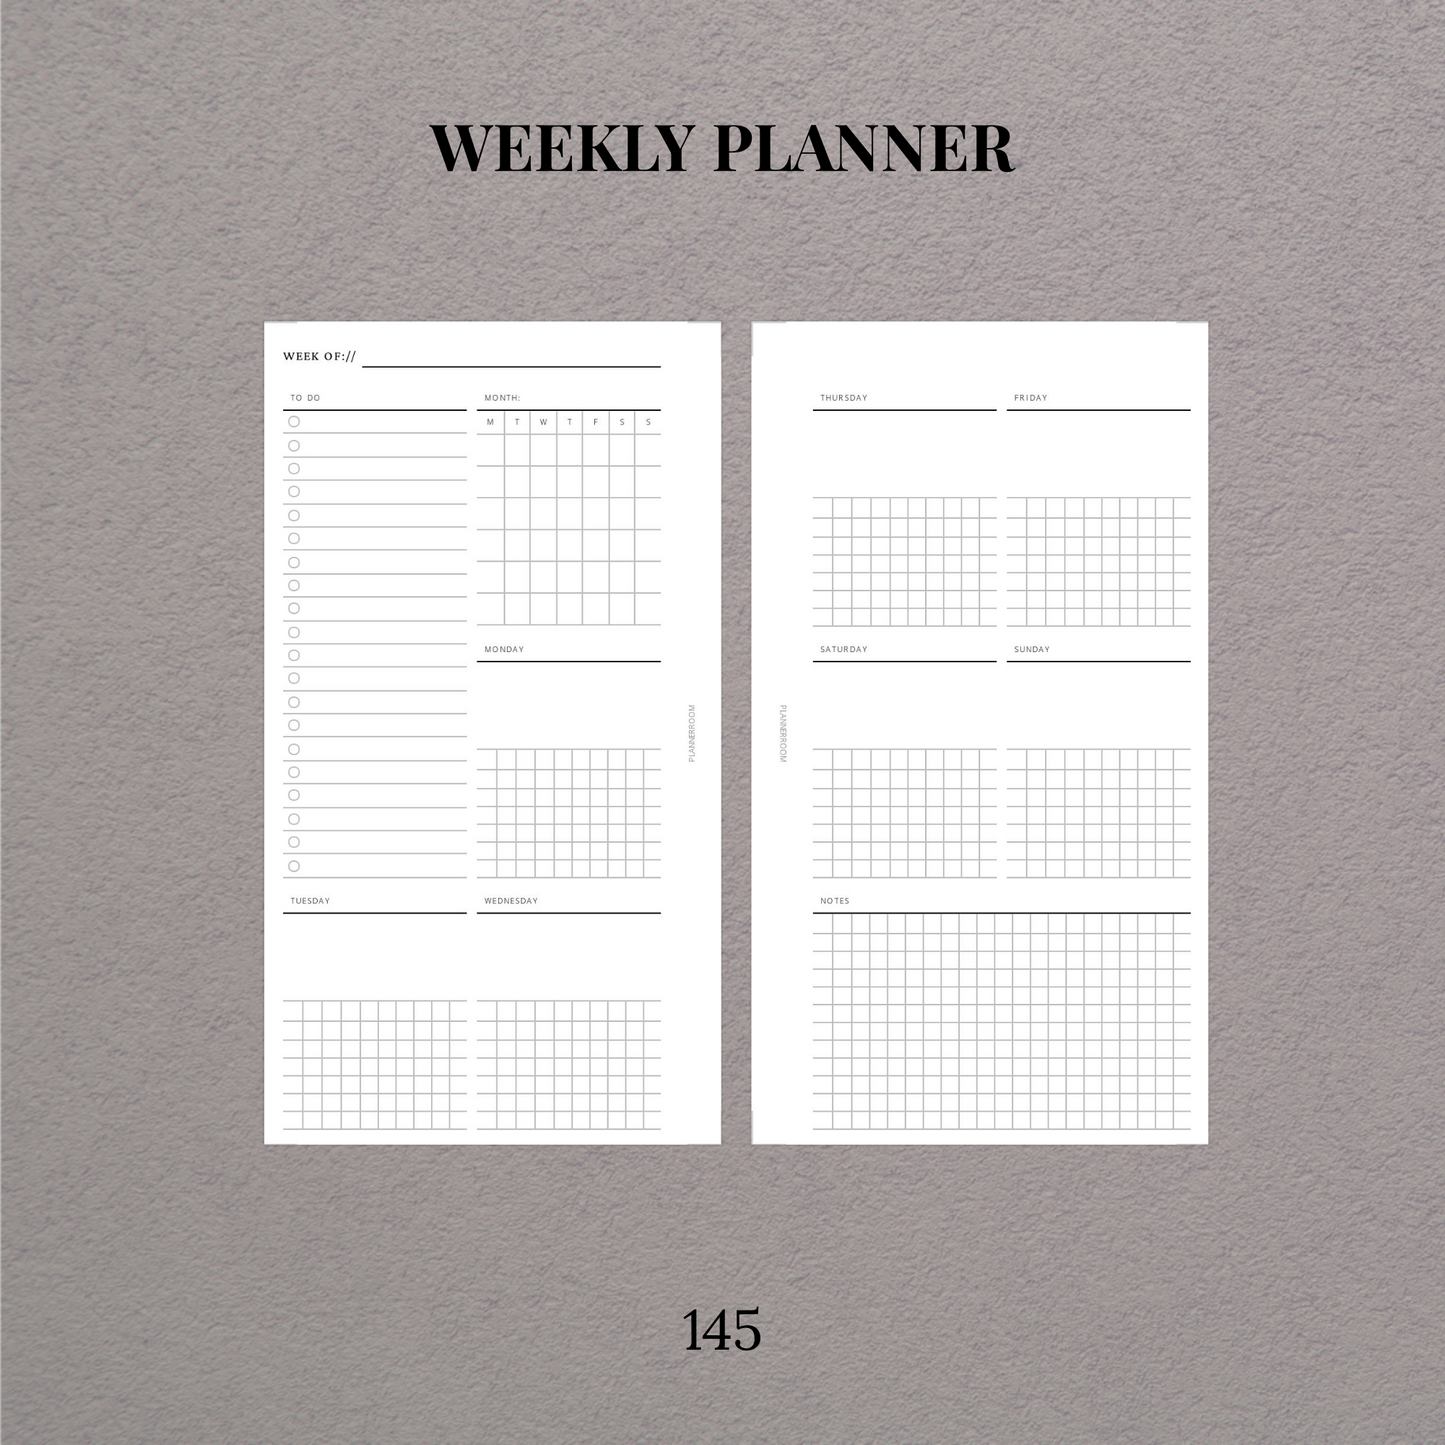 Weekly planner | Printable inserts - 145